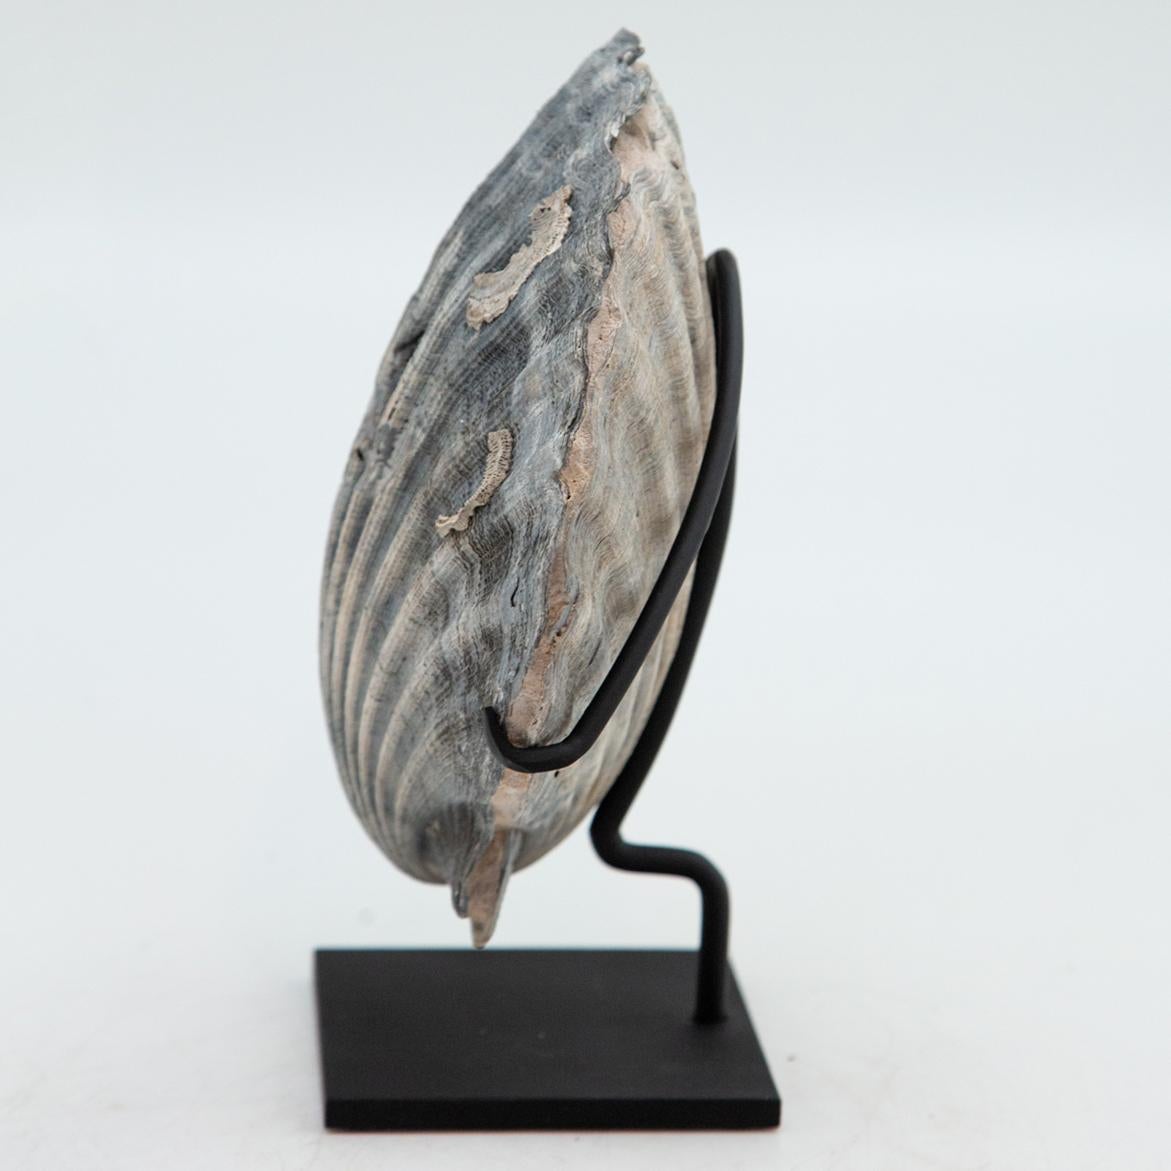 Mounted fossilized blue-grey pecten shell. Mounted on custom metal base. Measures: 9